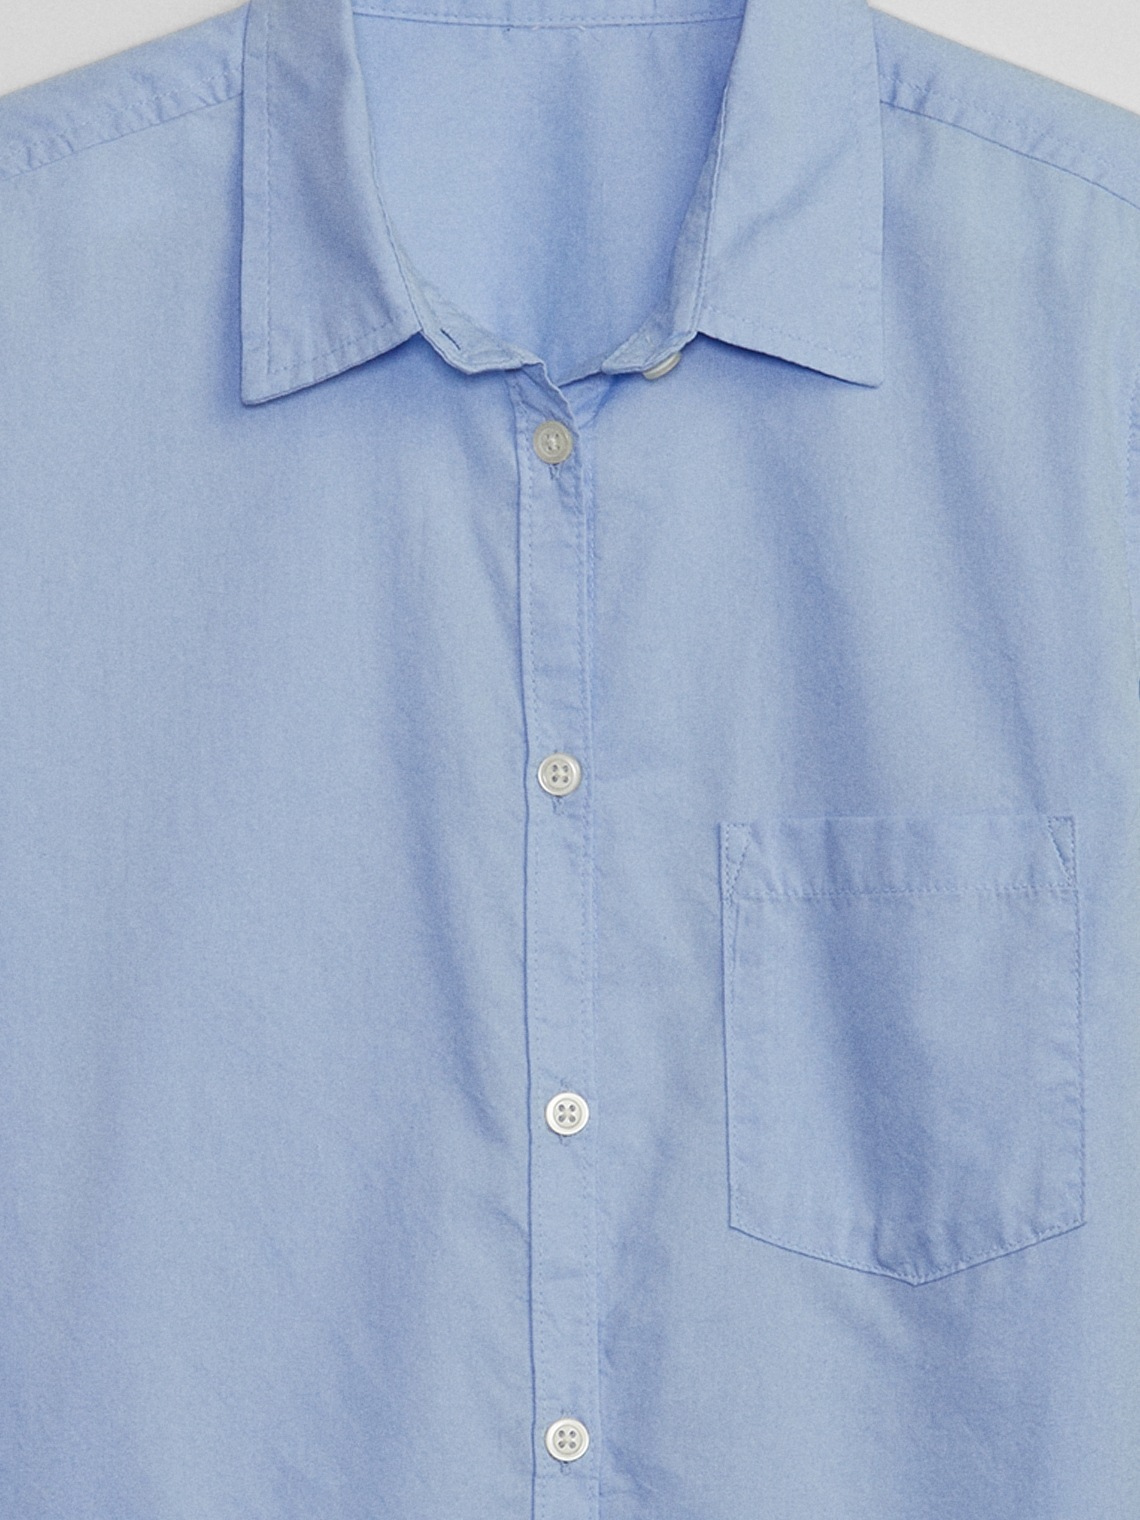 Classic Cotton Shirt | Gap Factory